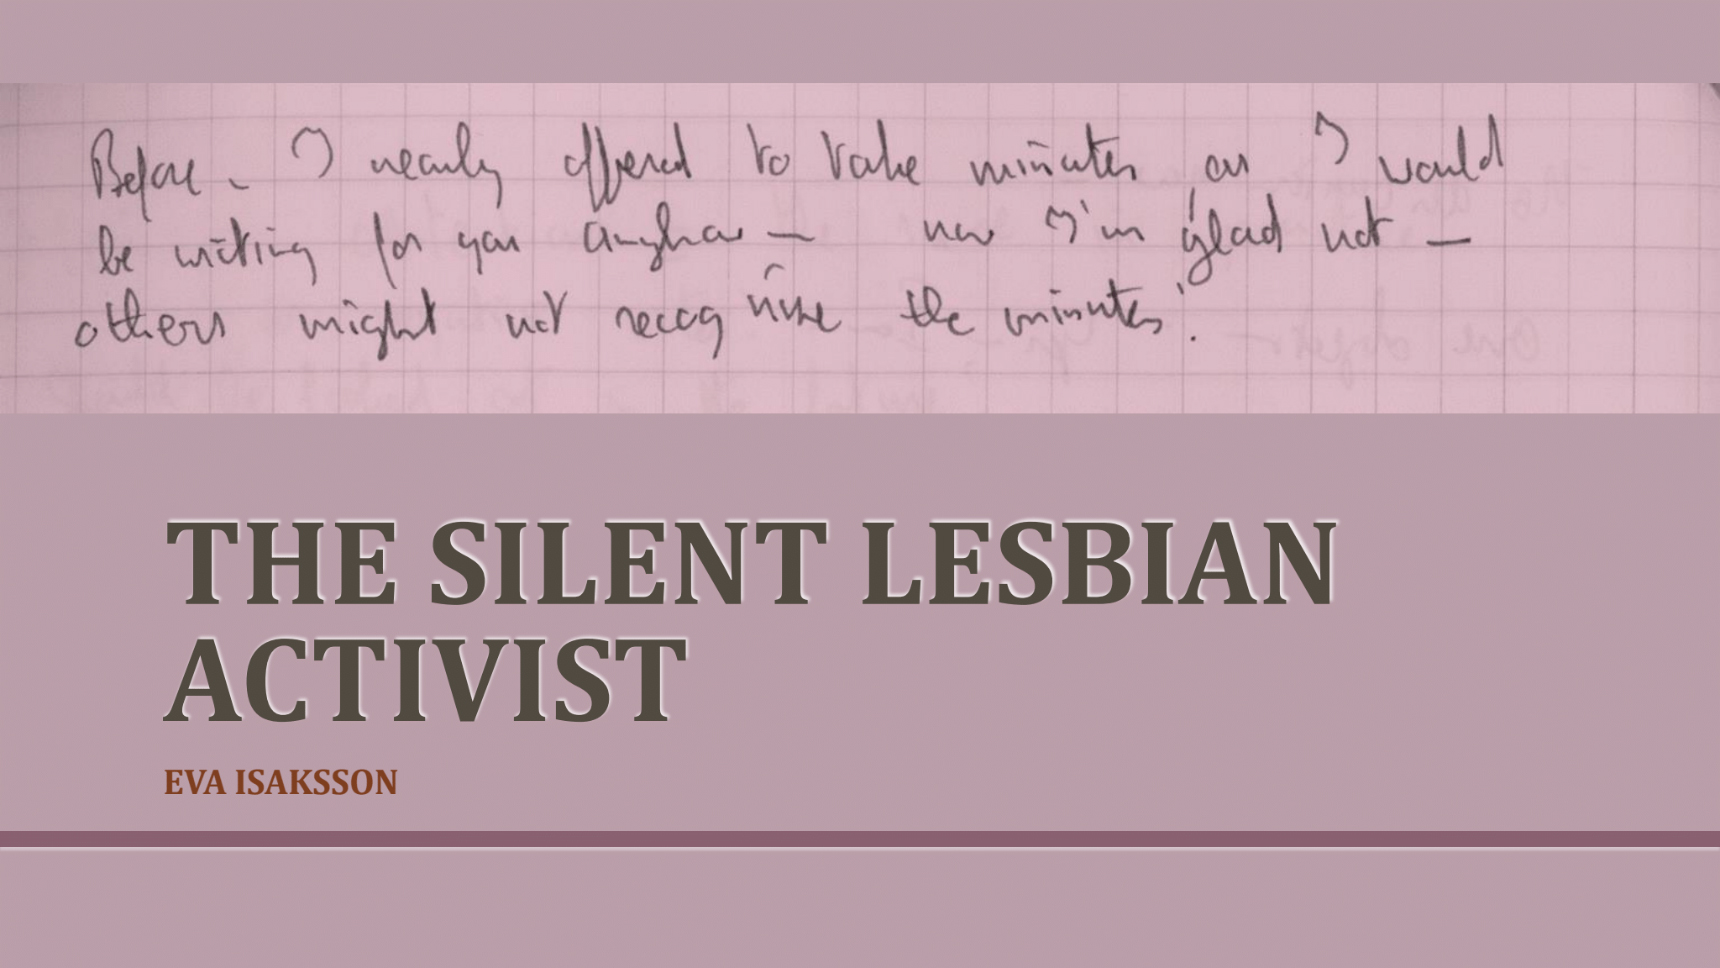 The Silent Lesbian Activist